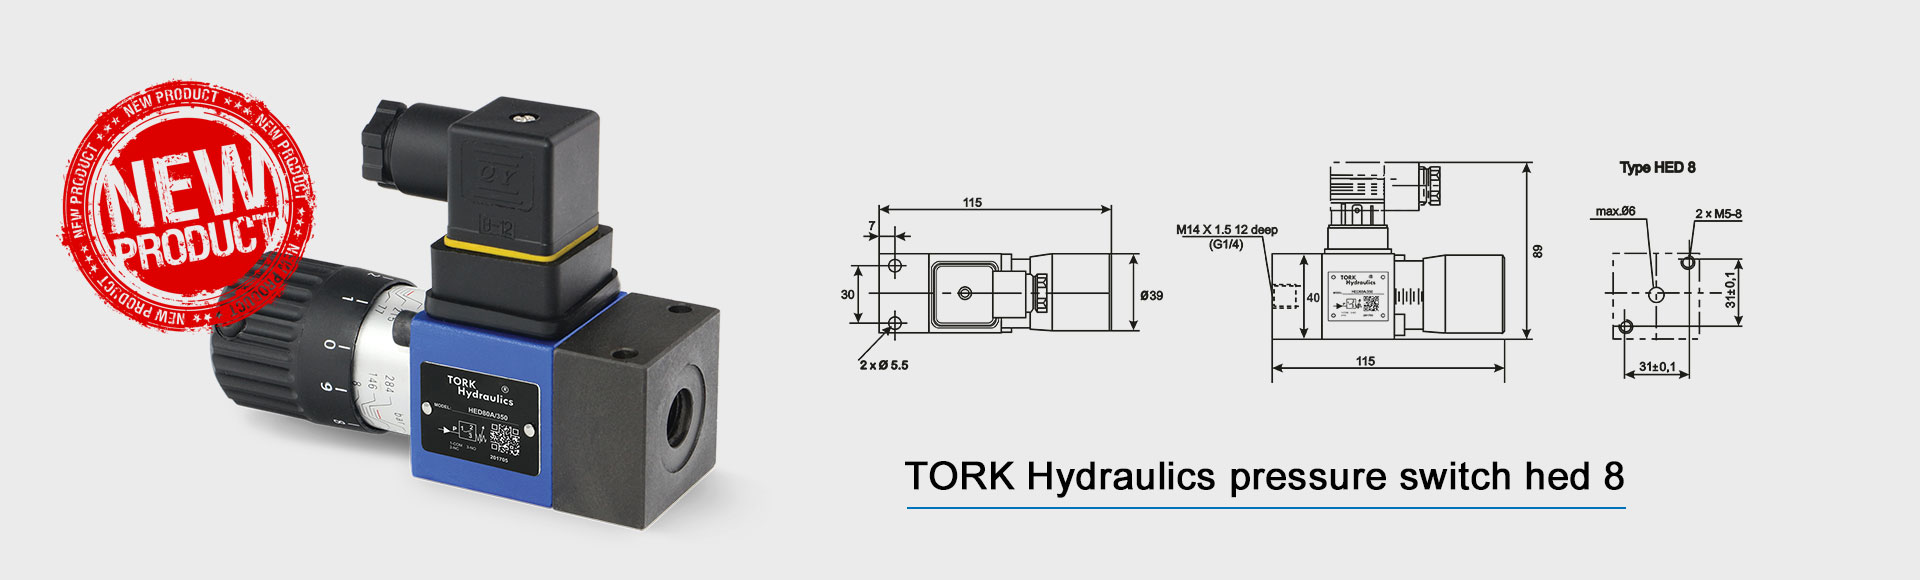 tork-hydraulics-pressure-switch-hed-8